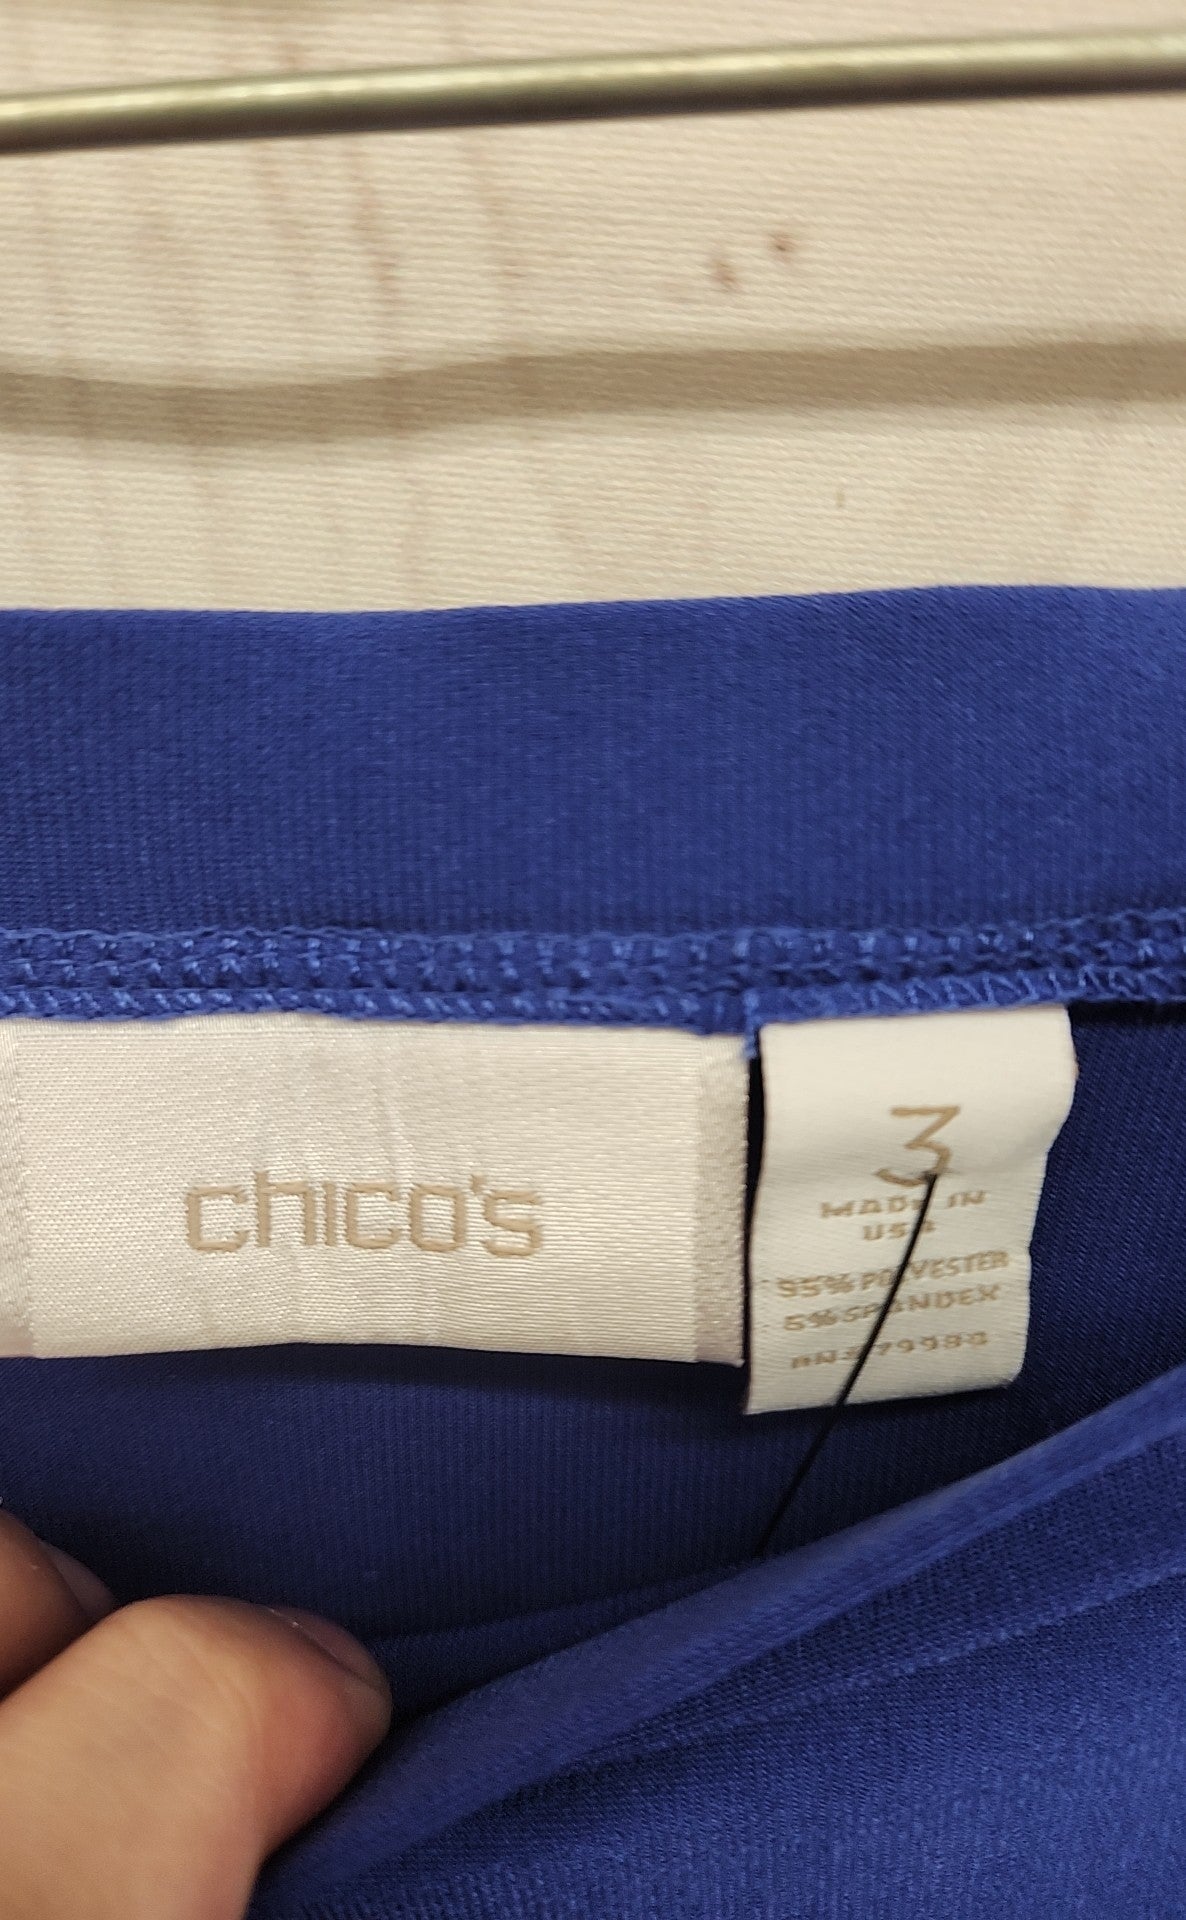 Chico's Women's Size 16 Blue Skirt